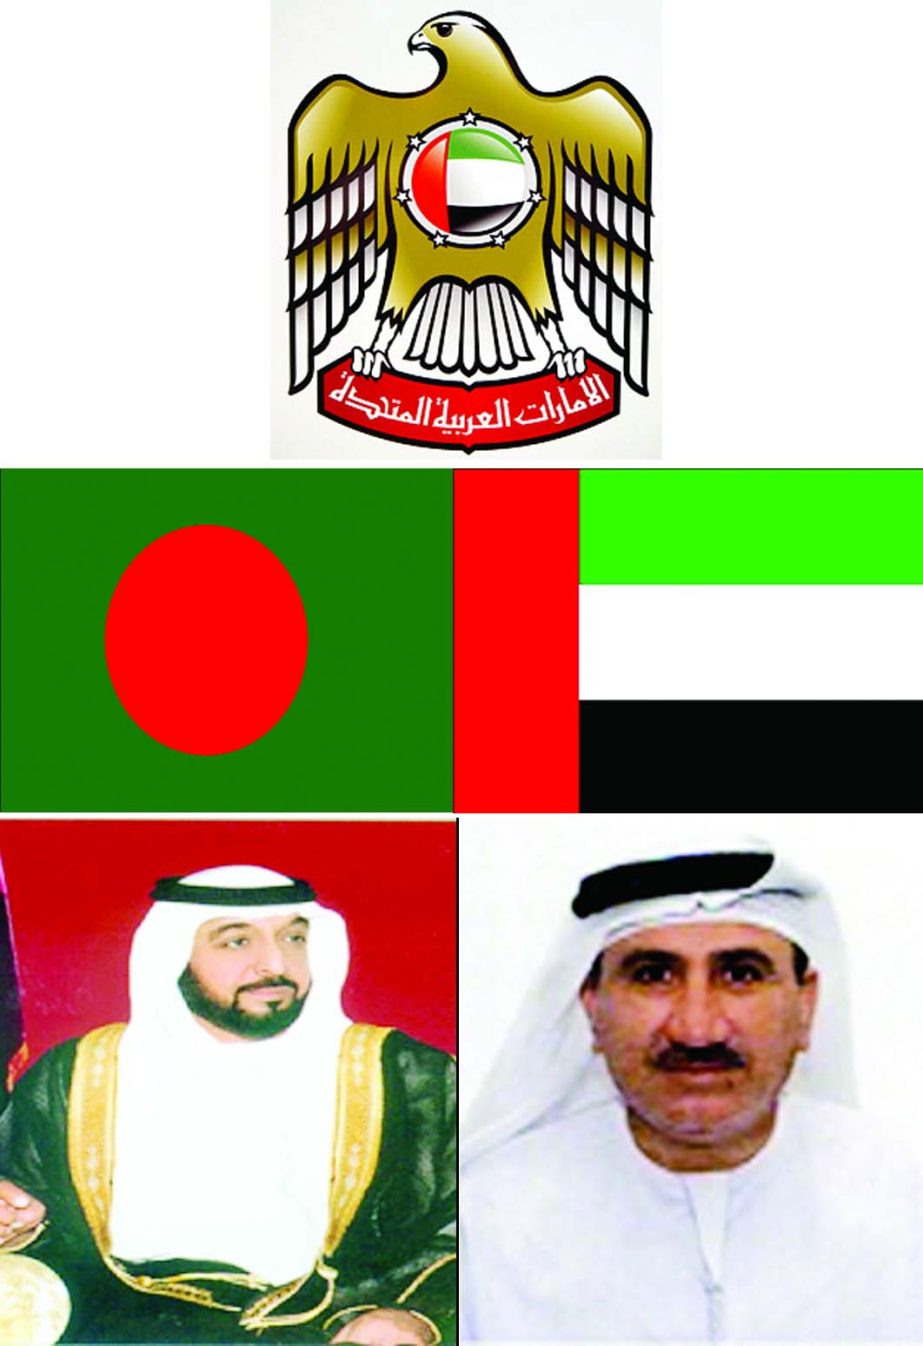 His Highness Sheikh Khalifa bin Zayed Al Nahyan President of the United Arab Emirates